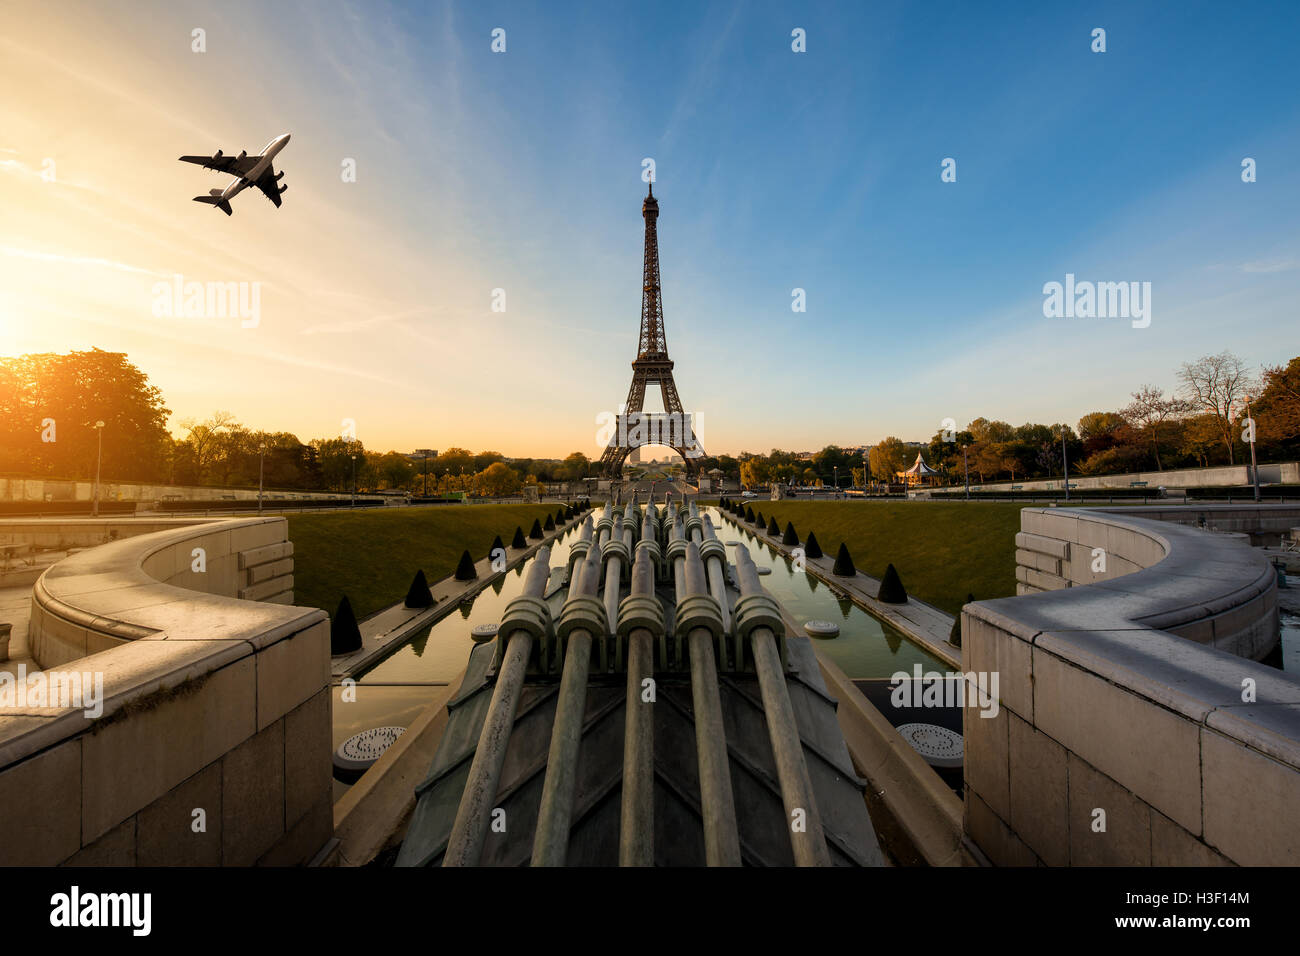 Airplane flying over Eiffel Tower in morning, Paris, France. Eiffel Tower is international landmark in Paris, France Stock Photo